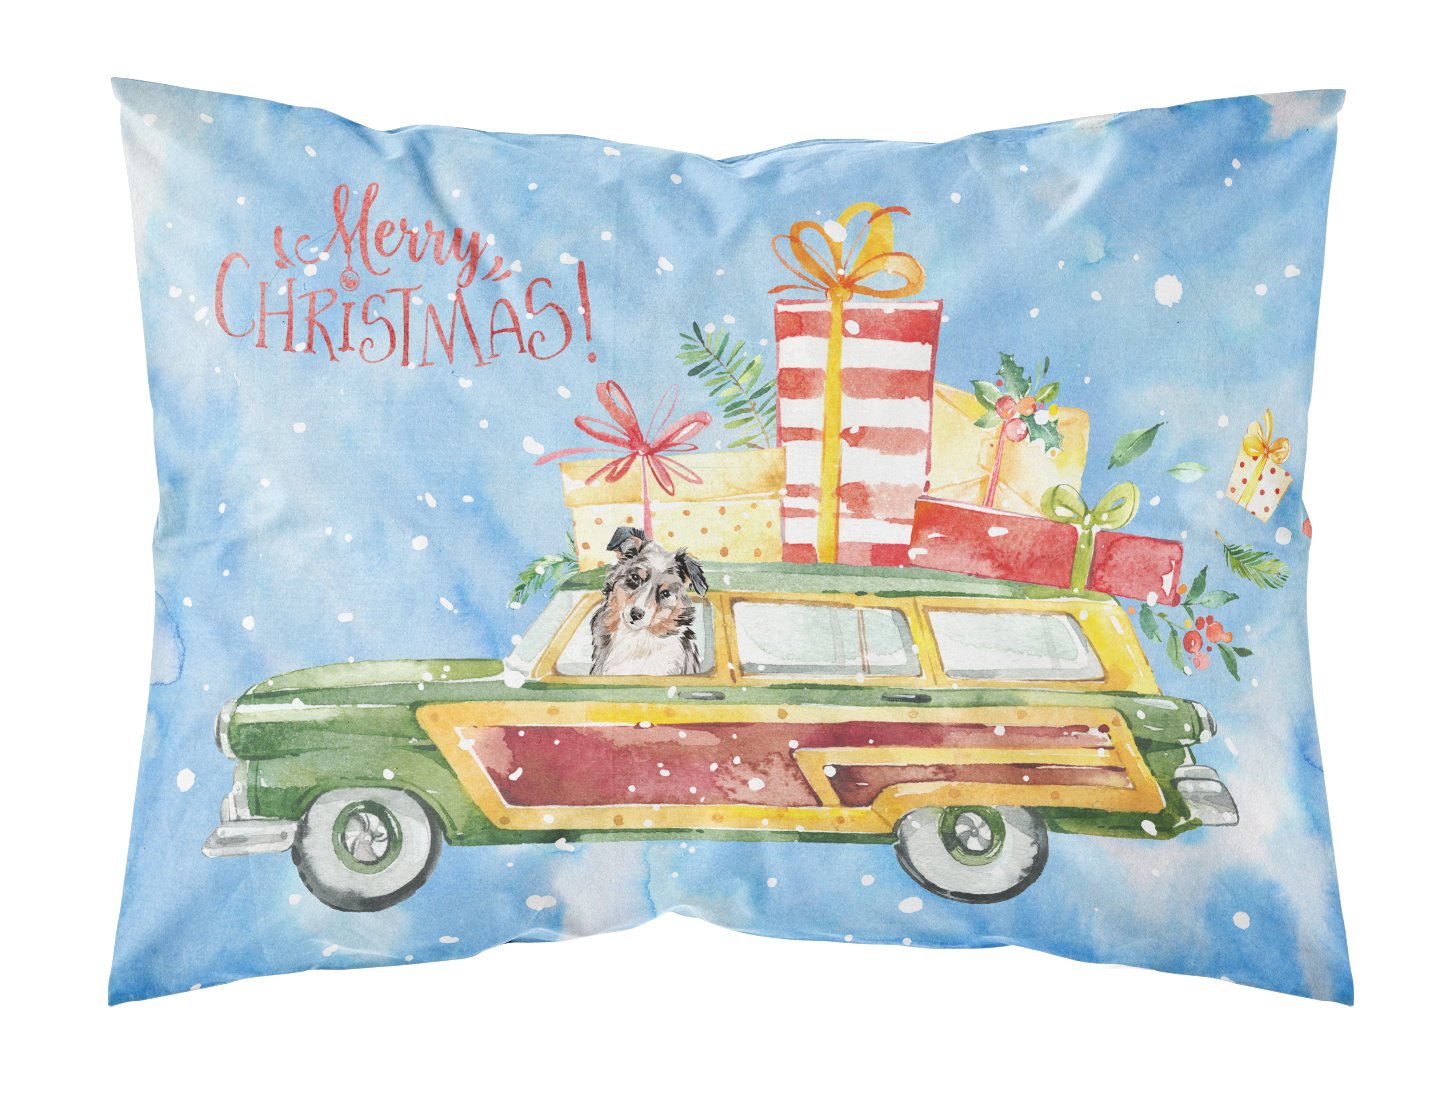 Merry Christmas Australian Shepherd Fabric Standard Pillowcase CK2434PILLOWCASE by Caroline's Treasures